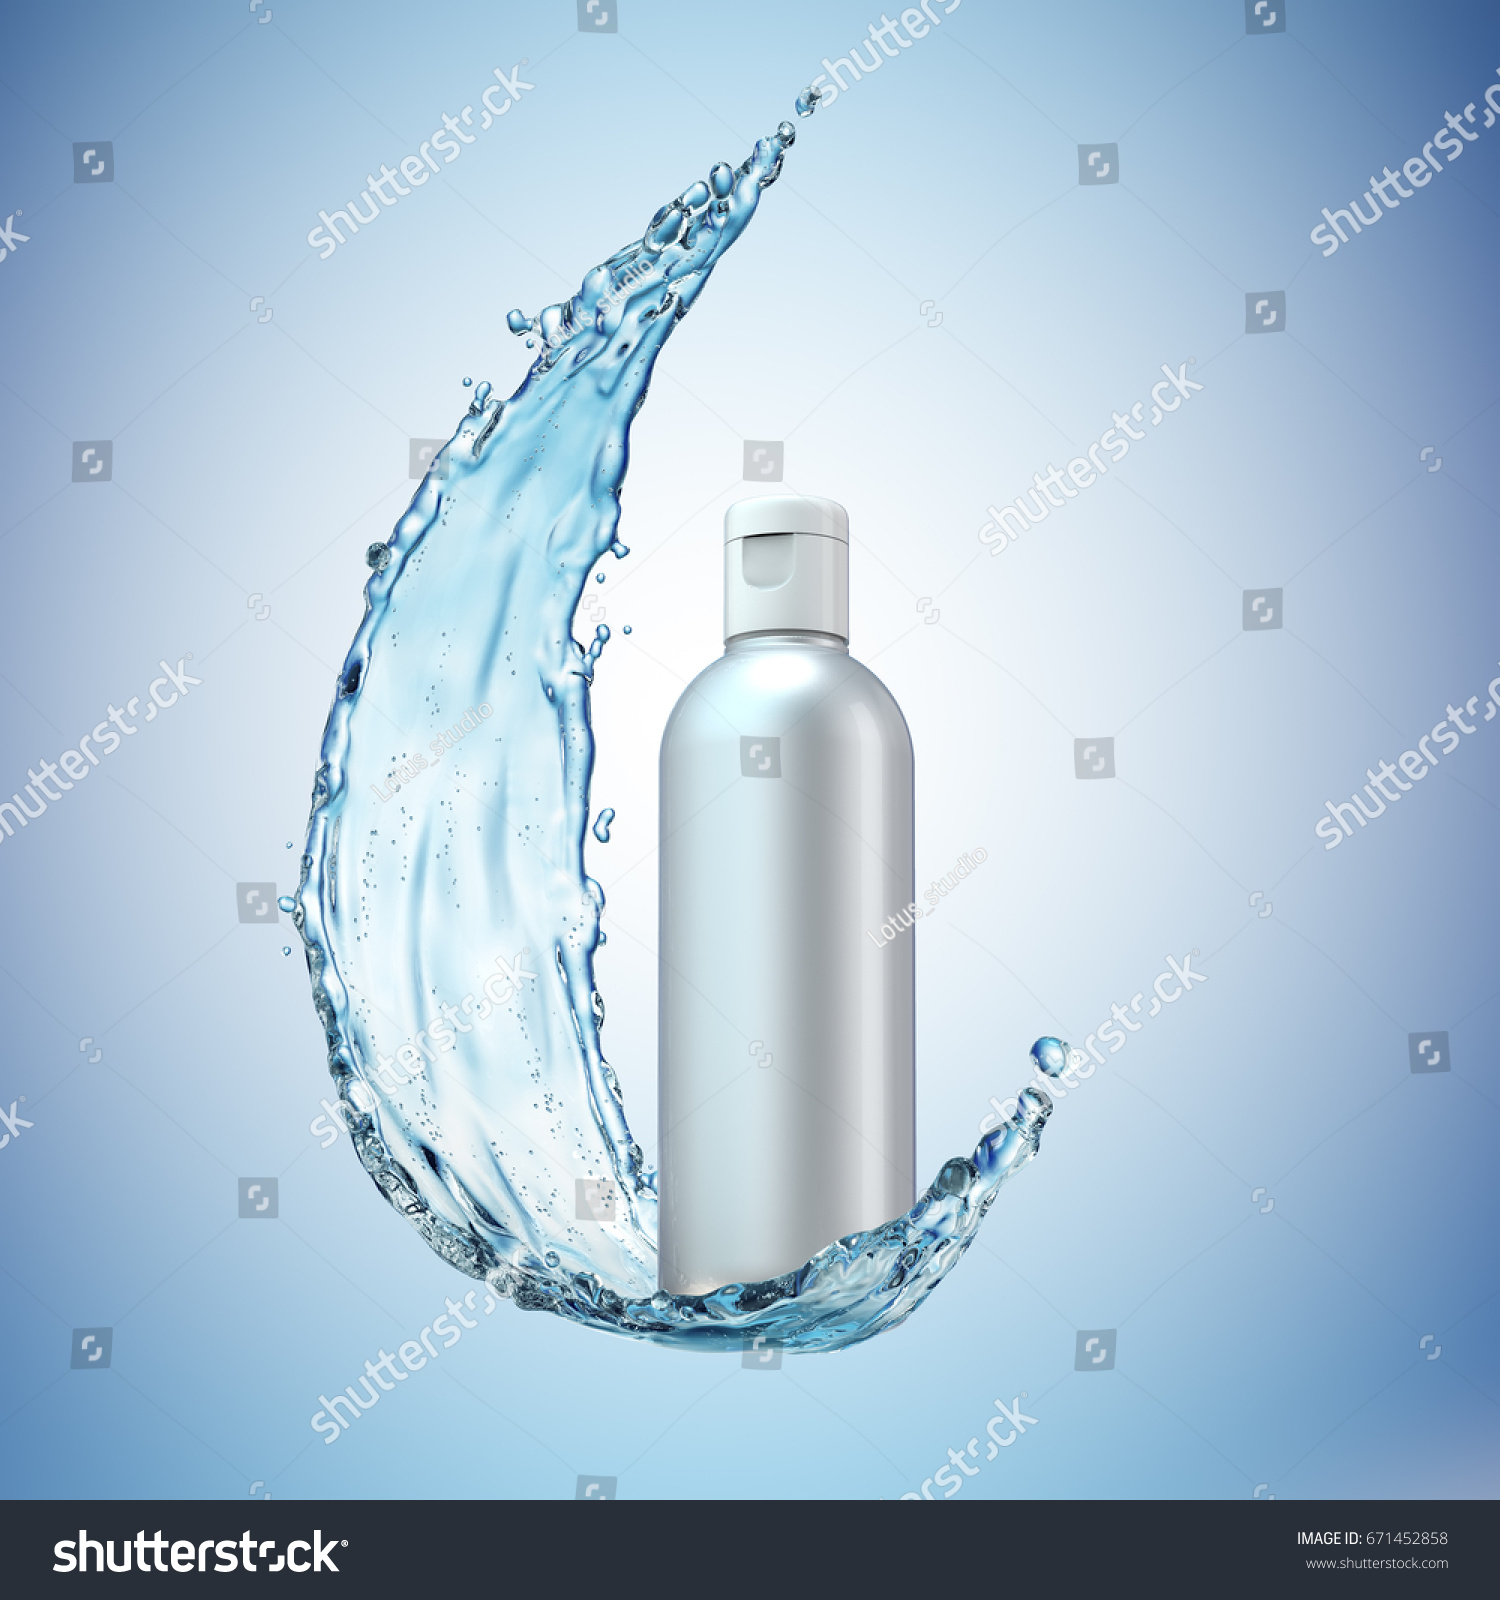 Cream Bottle Mock Water Splash On Stock Illustration 671452858 ...